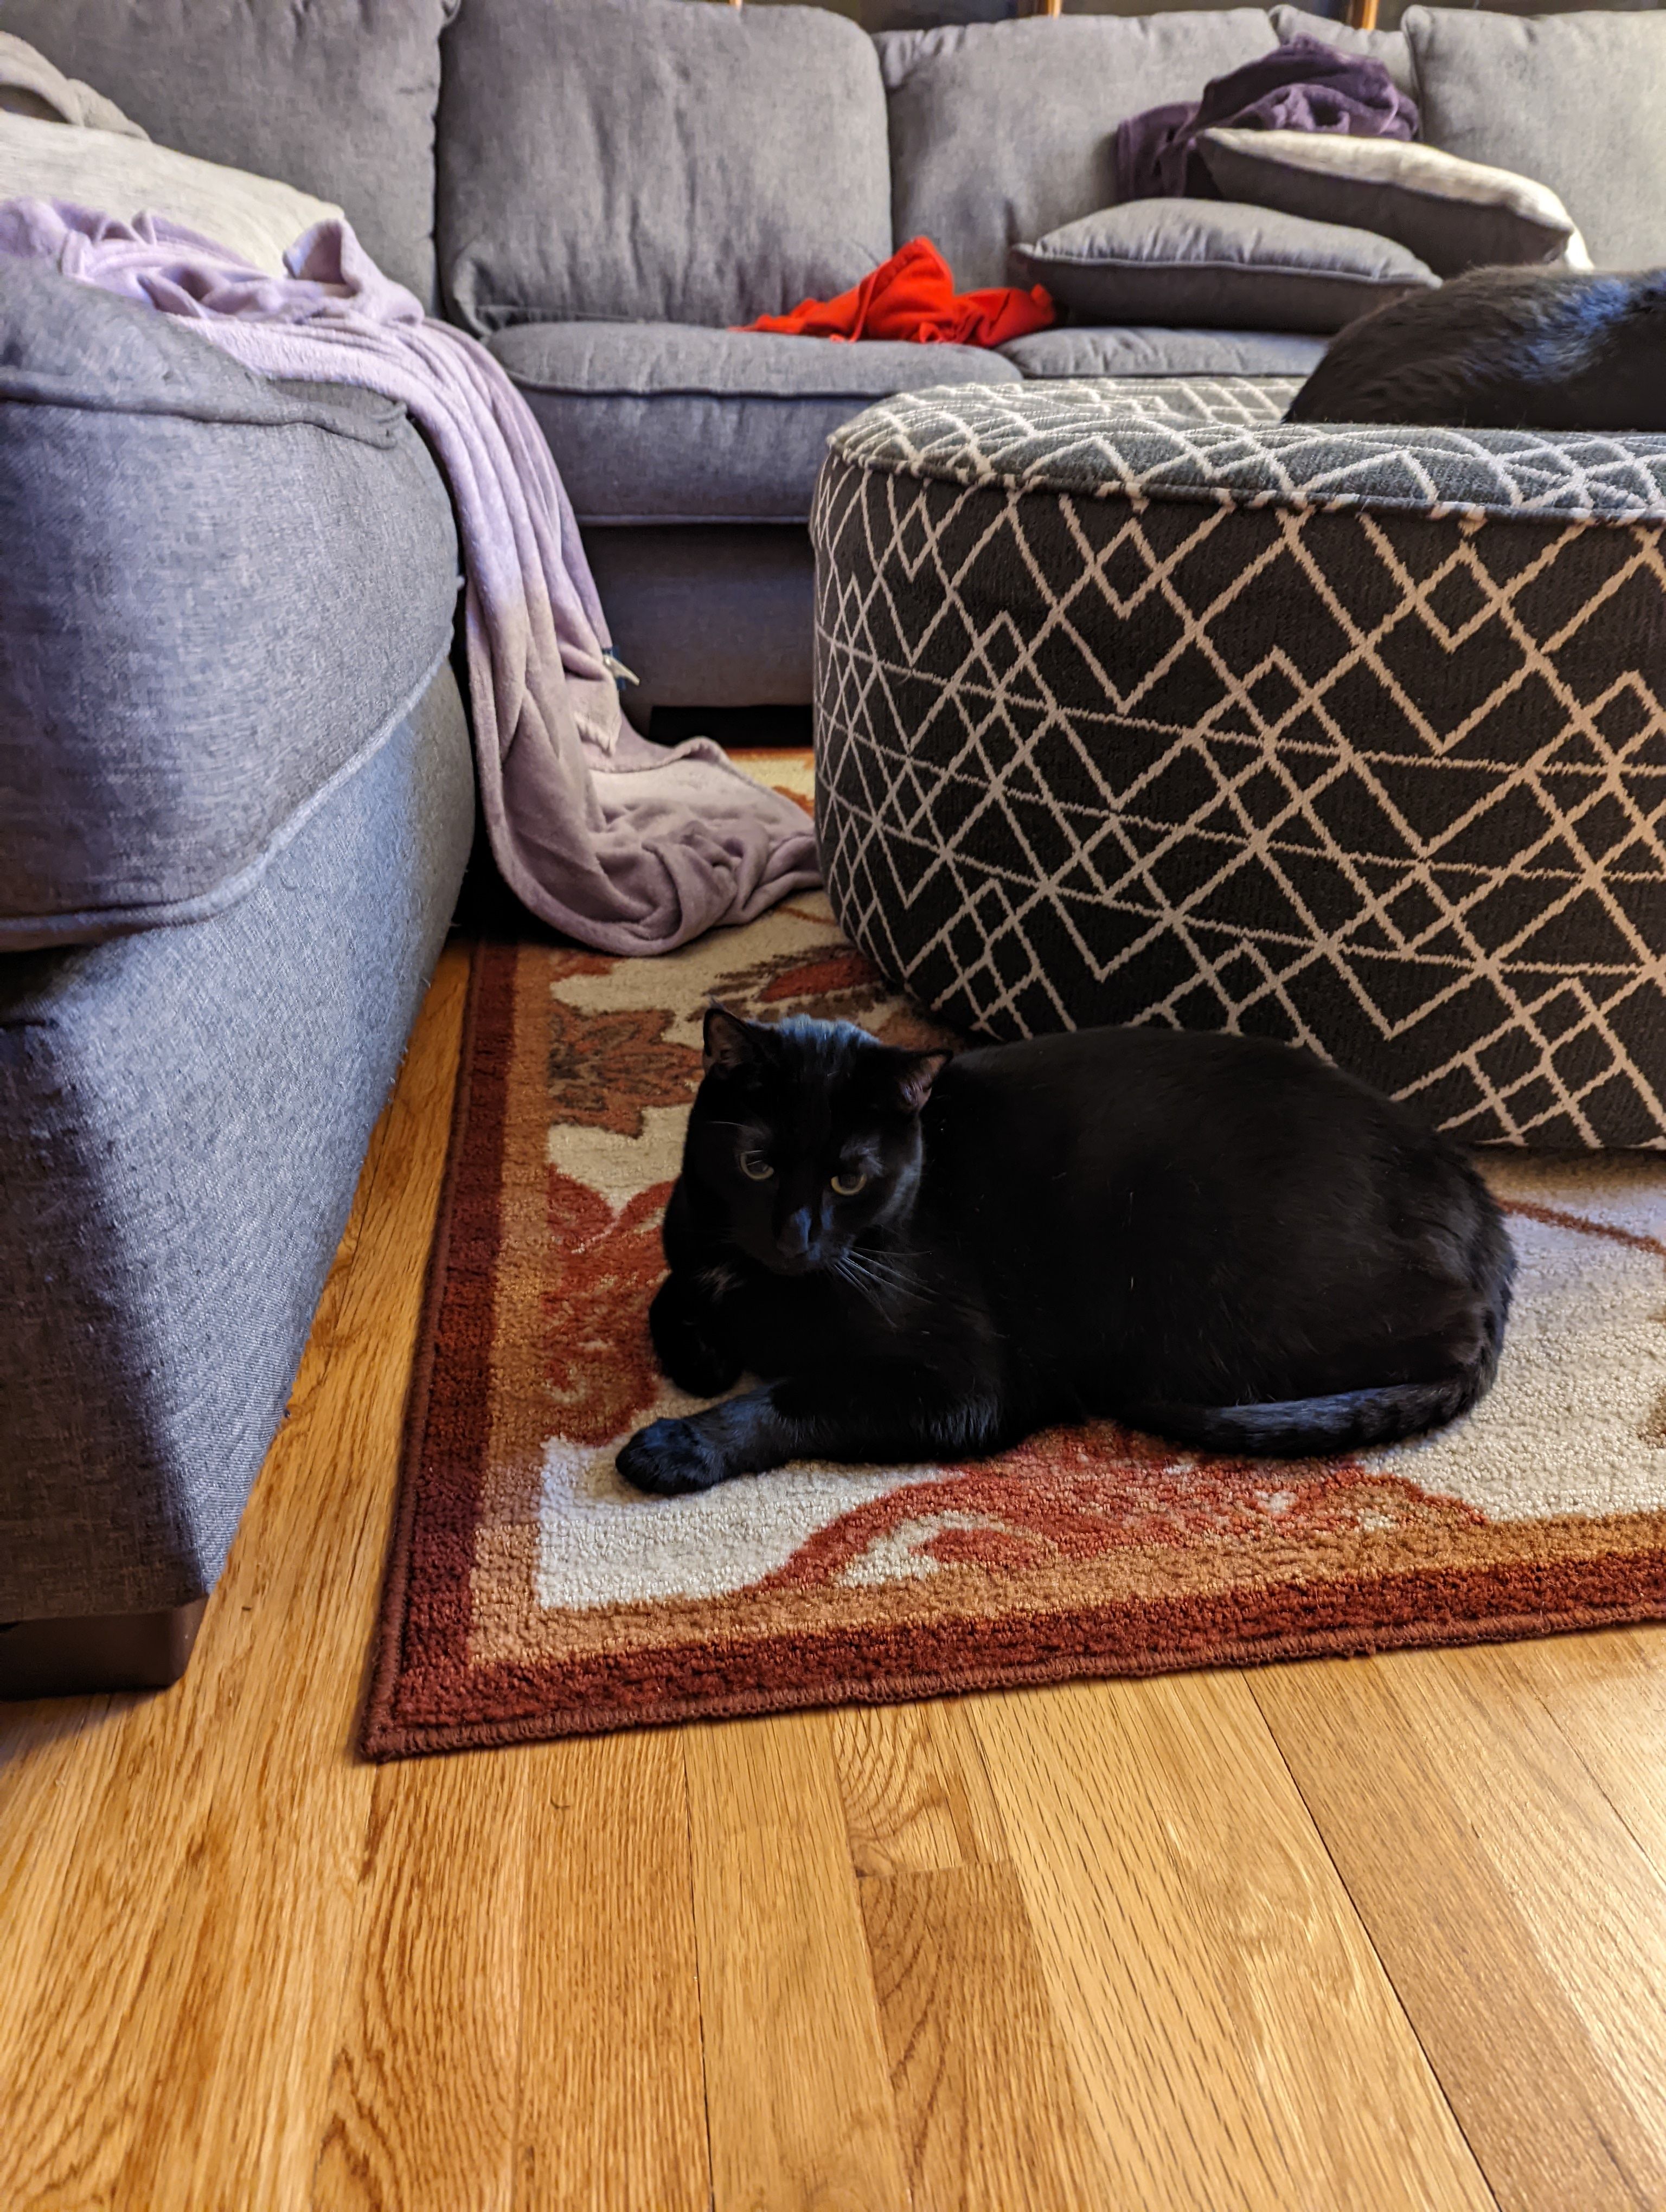 A black cat laying on a carpet at night taken on a Pixel 6 Pro using Night Sight